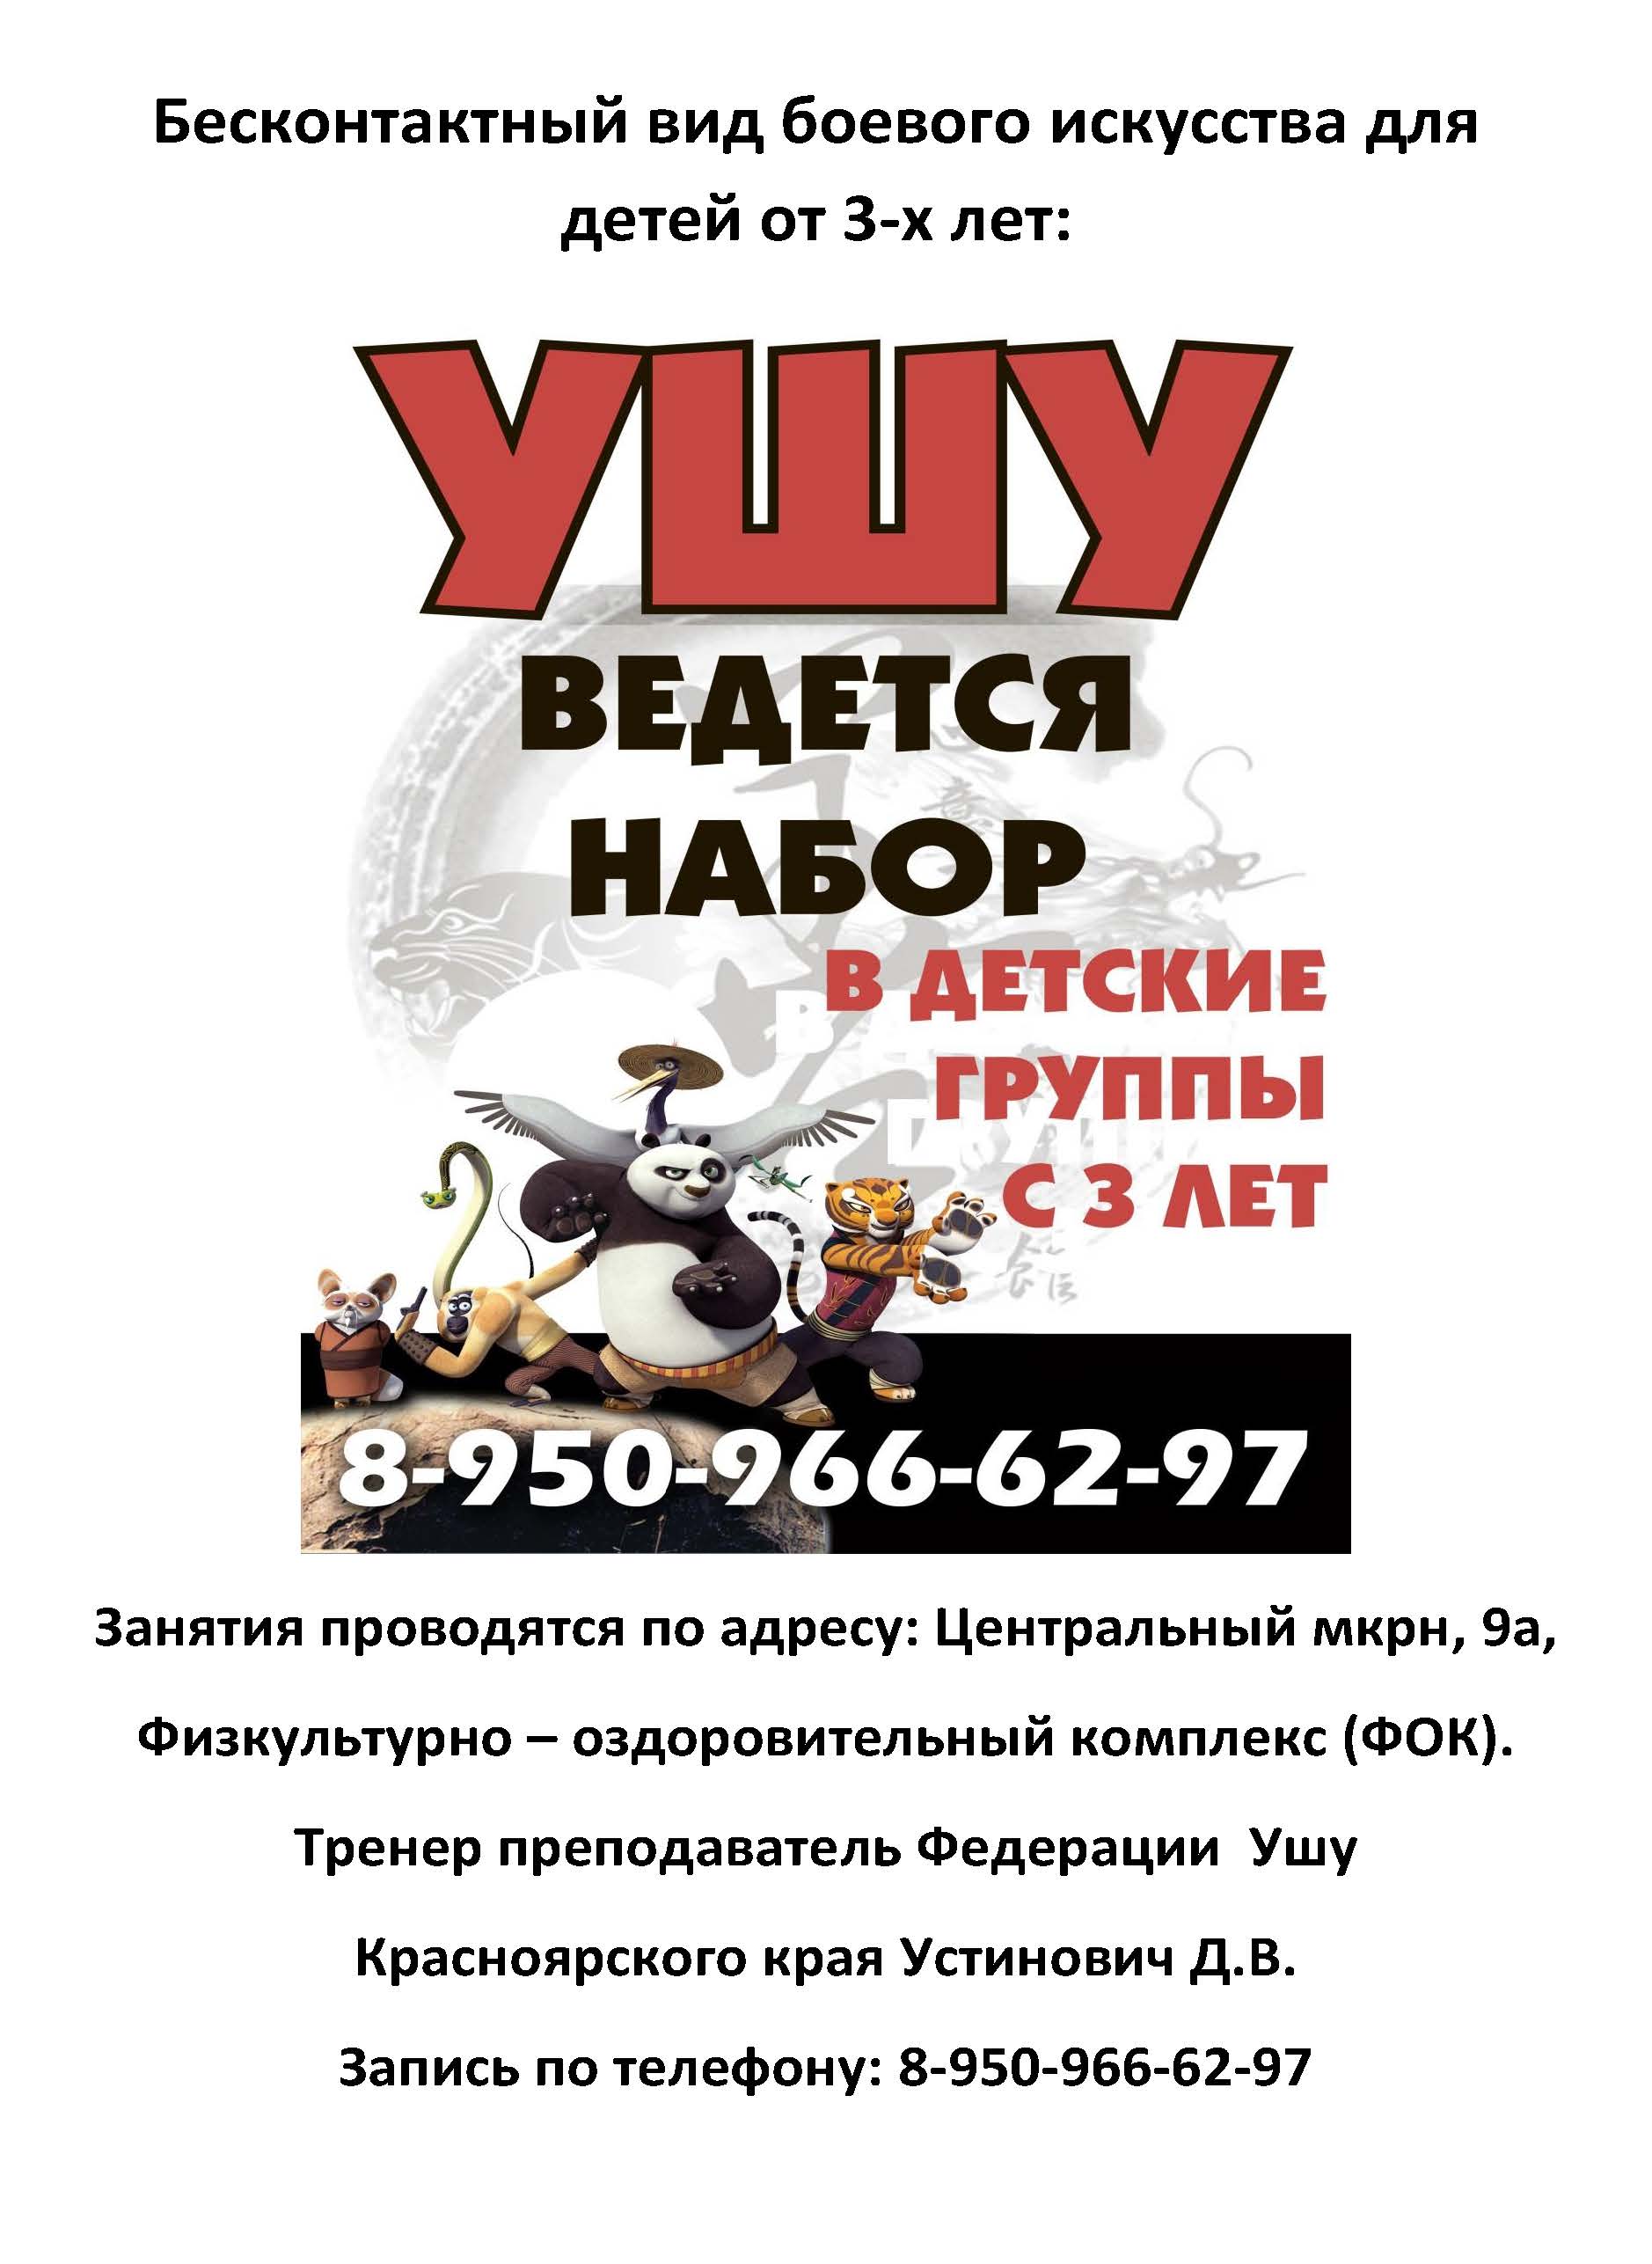 Саяногорск Инфо - reklama-dlya-sadikov.jpg, Скачано: 442